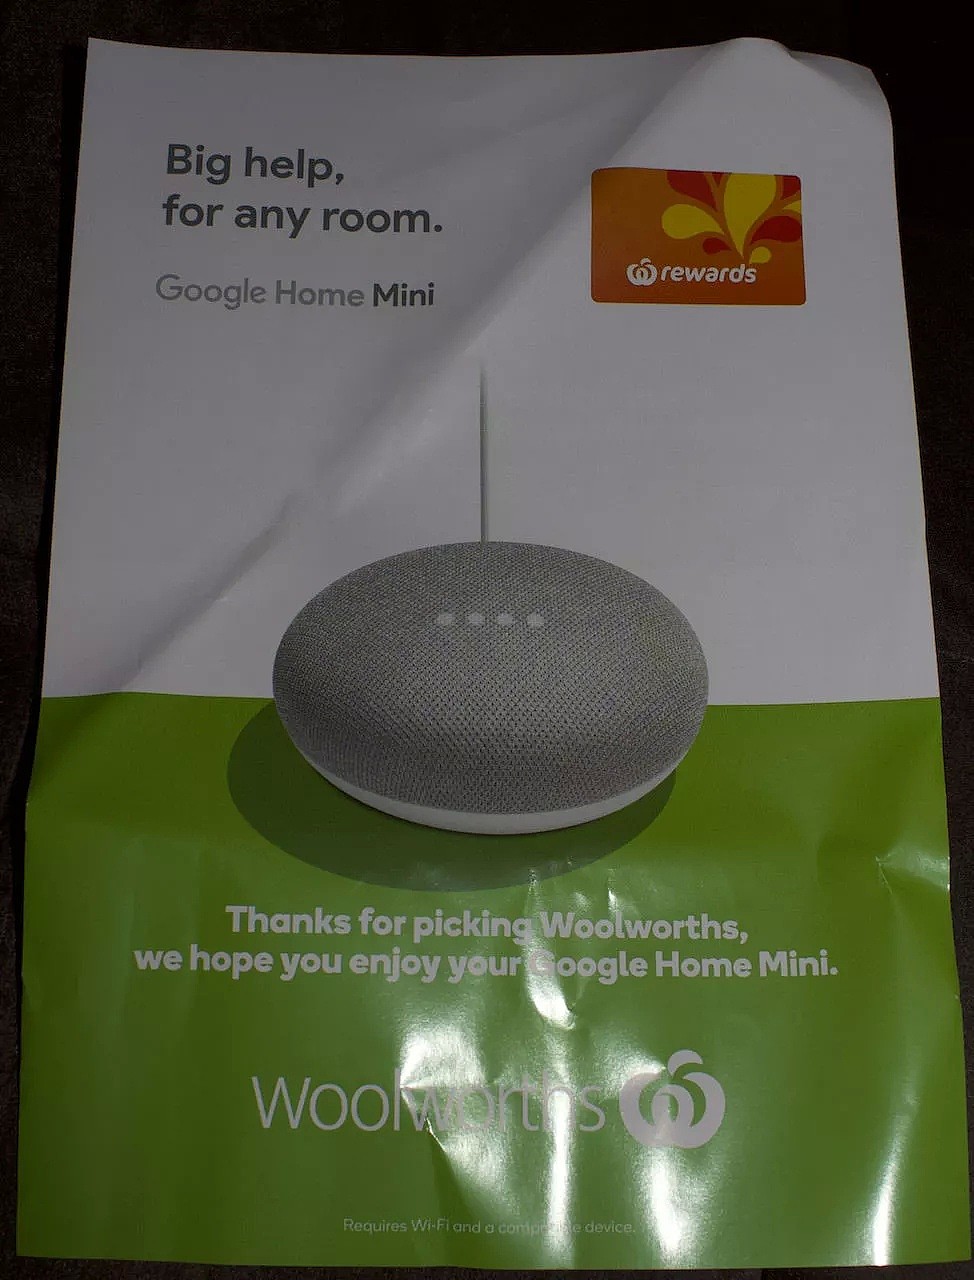 惊喜！Woolworths正在免费送Google Home Mini，人人有机会获得！ - 10